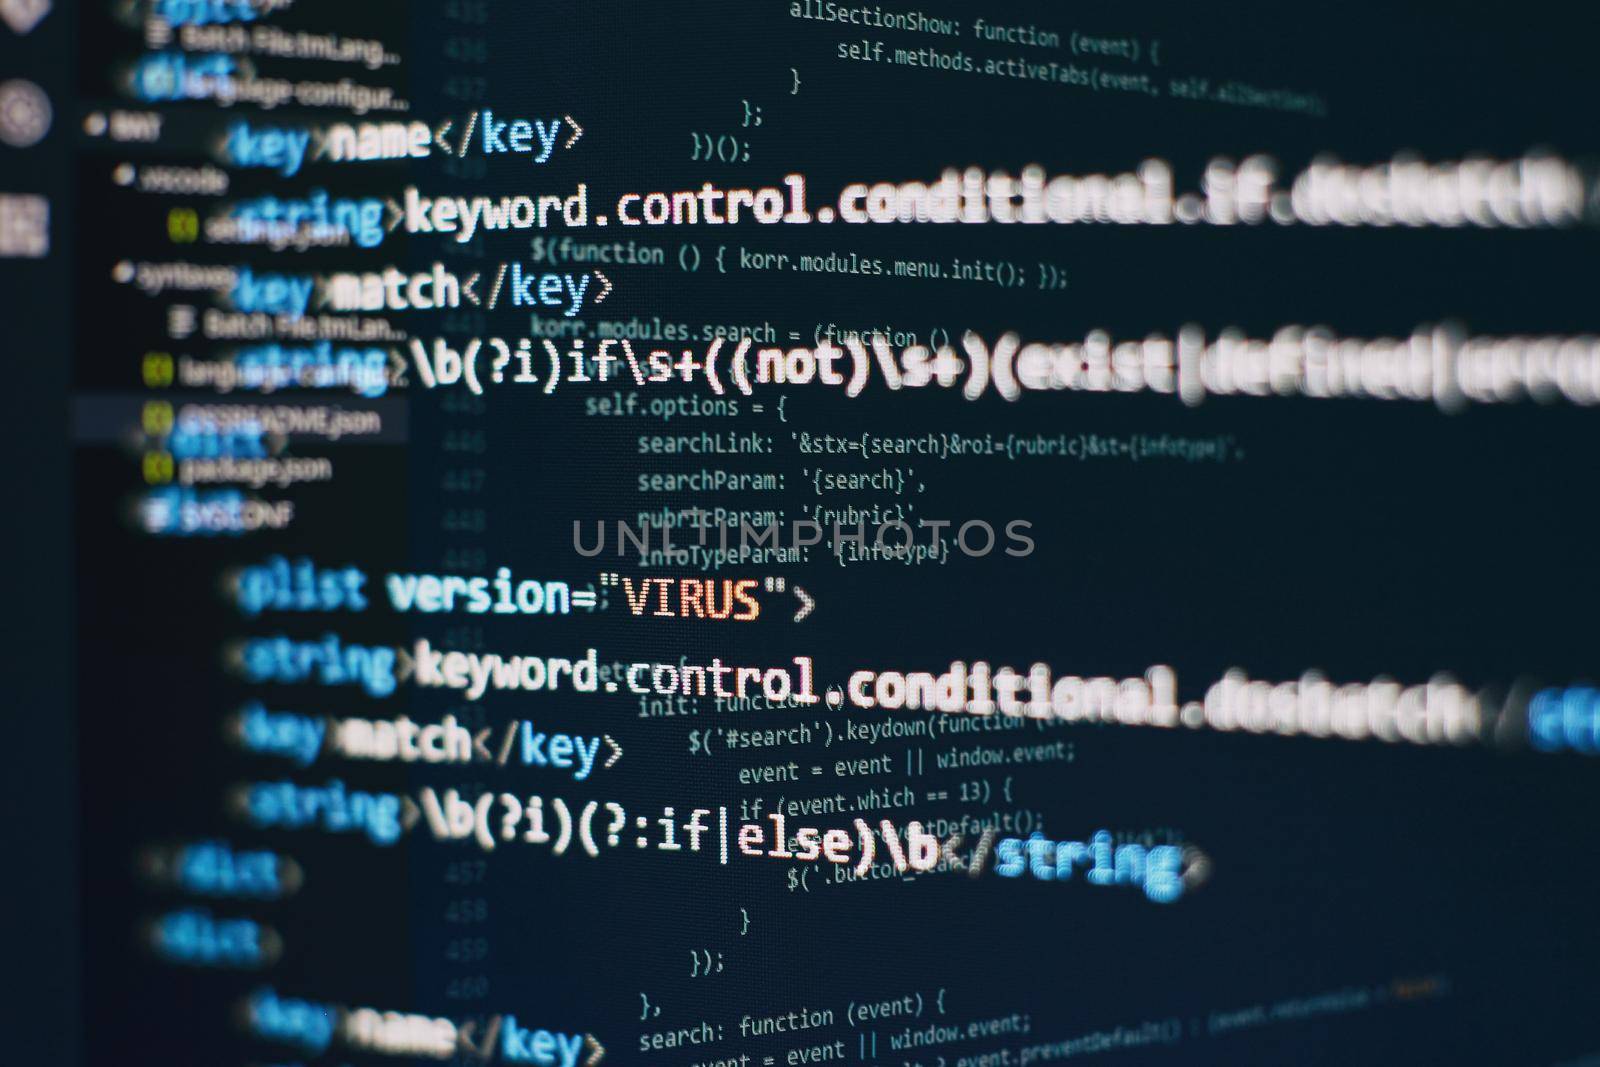 Software developer programming code. Abstract computer script code. Programming code screen of software developer.